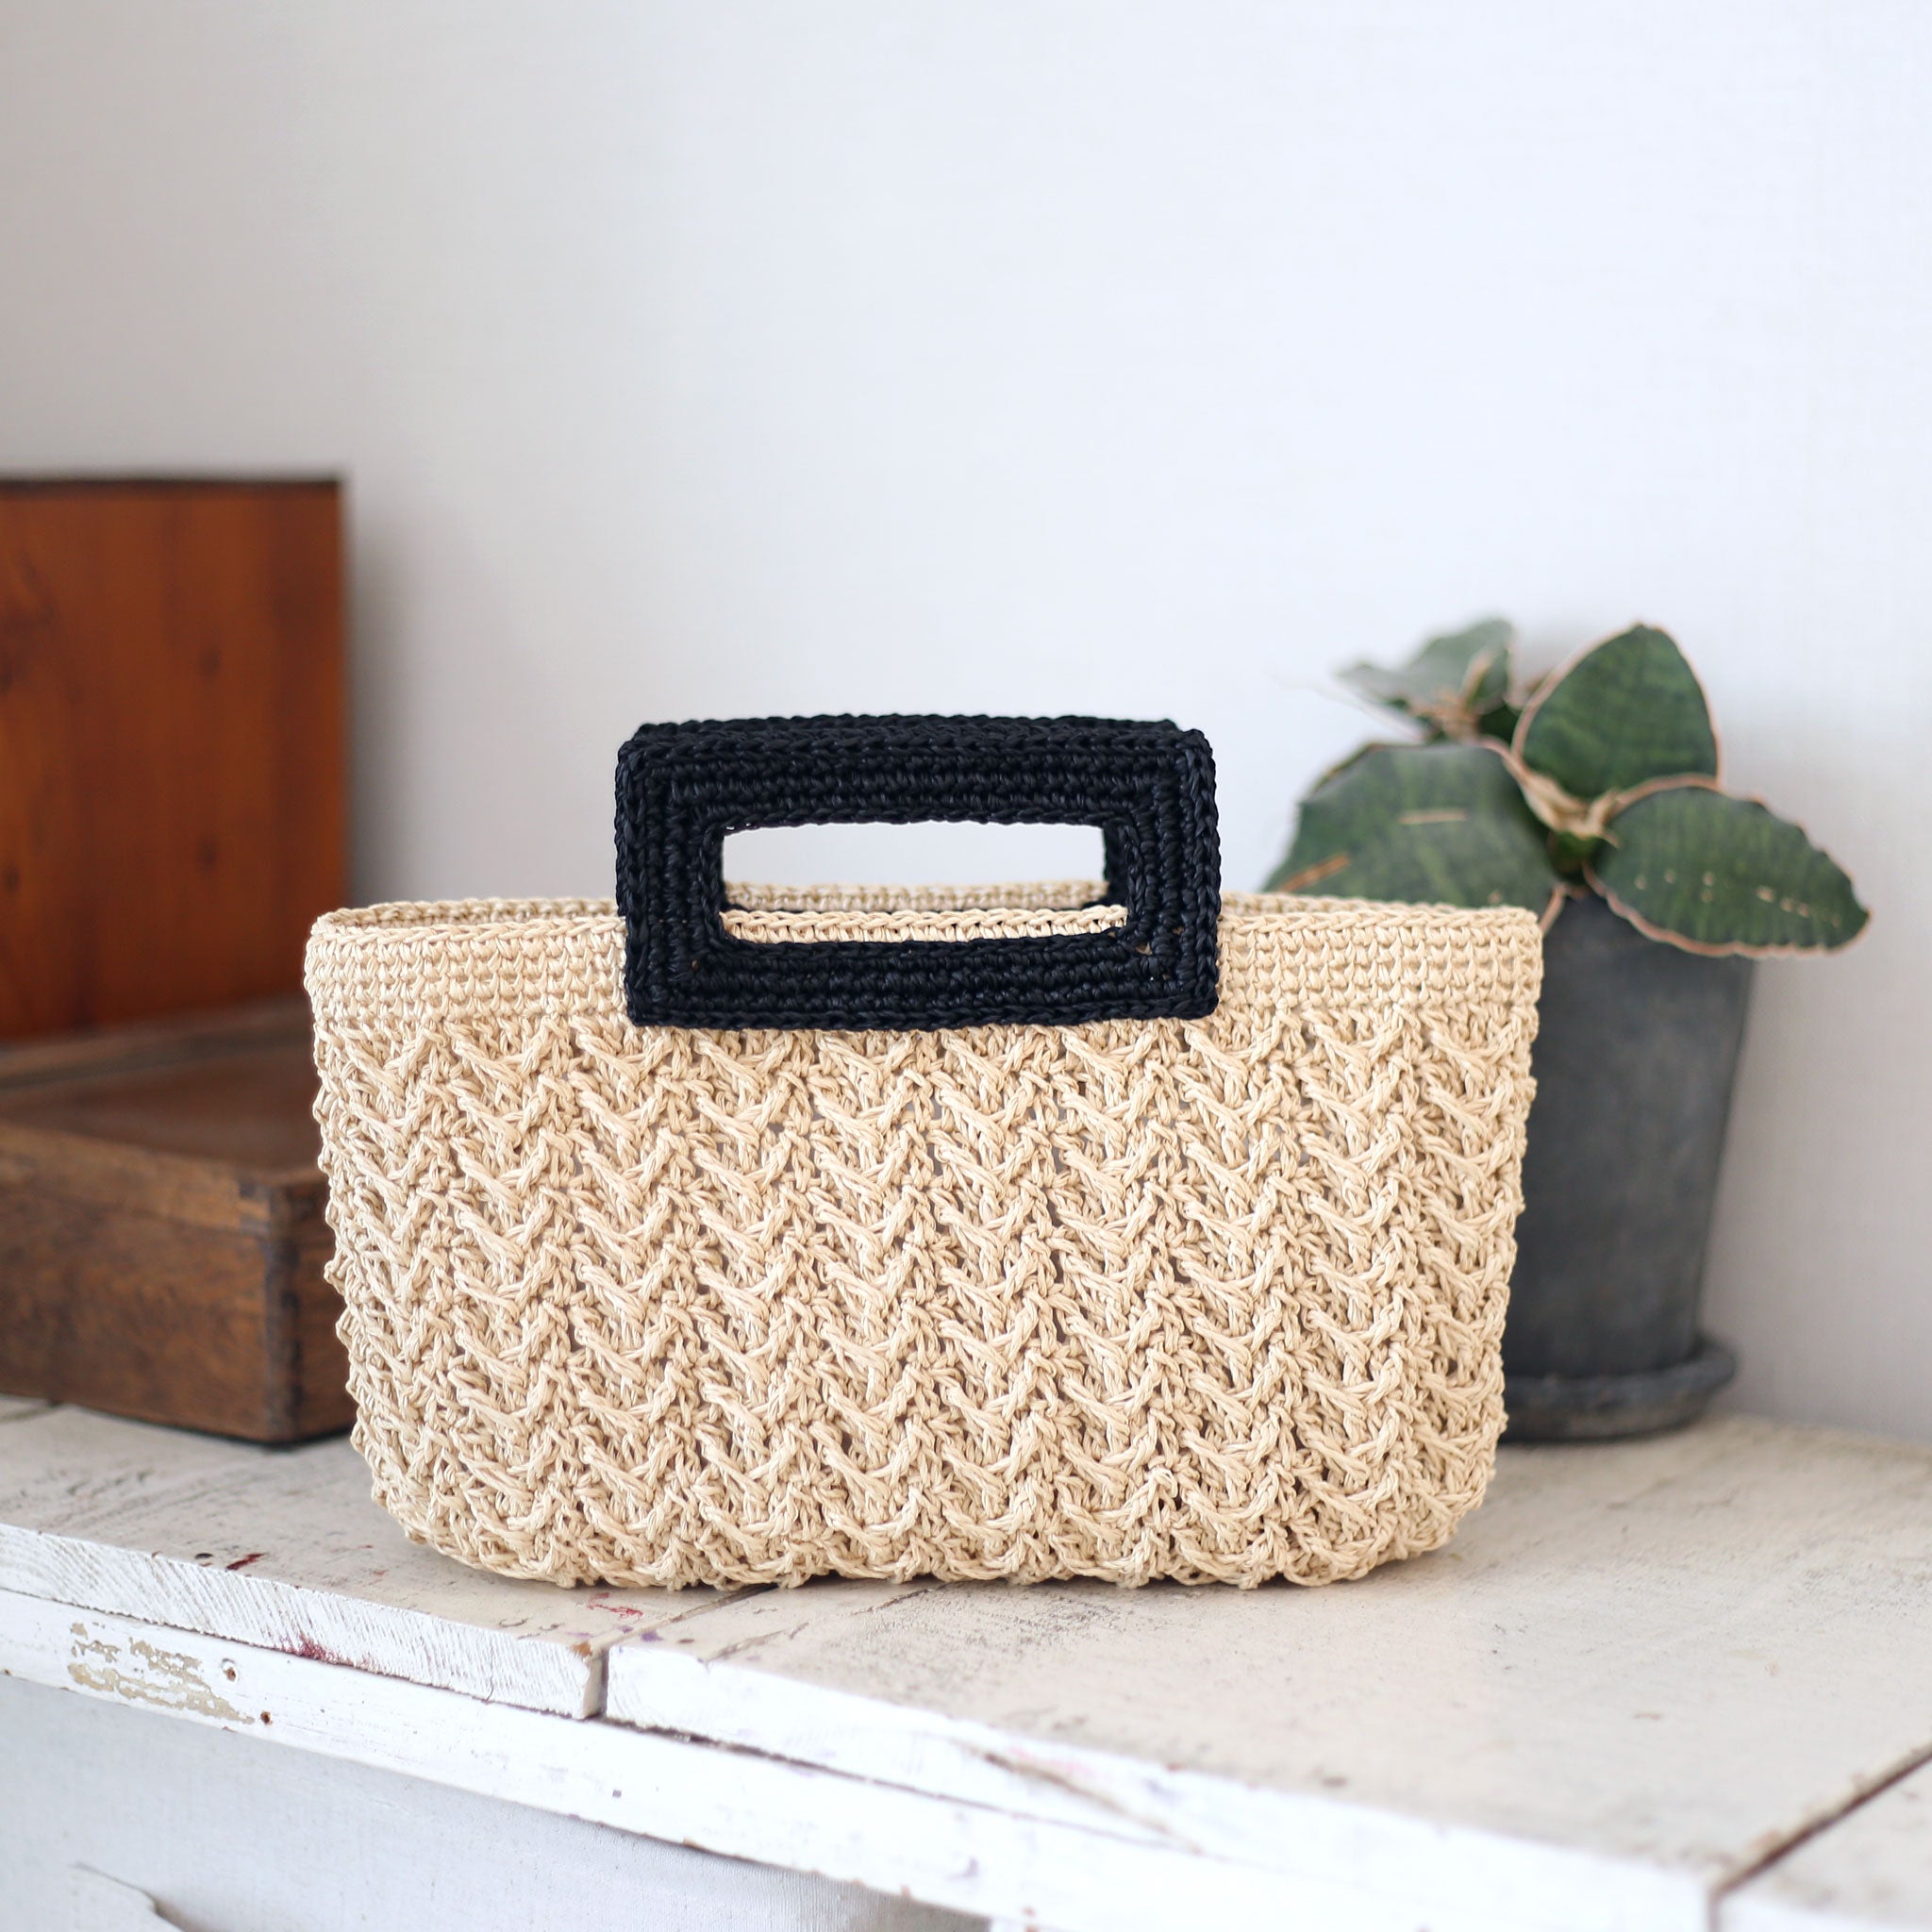 "Square handle bag" Crochet Pattern